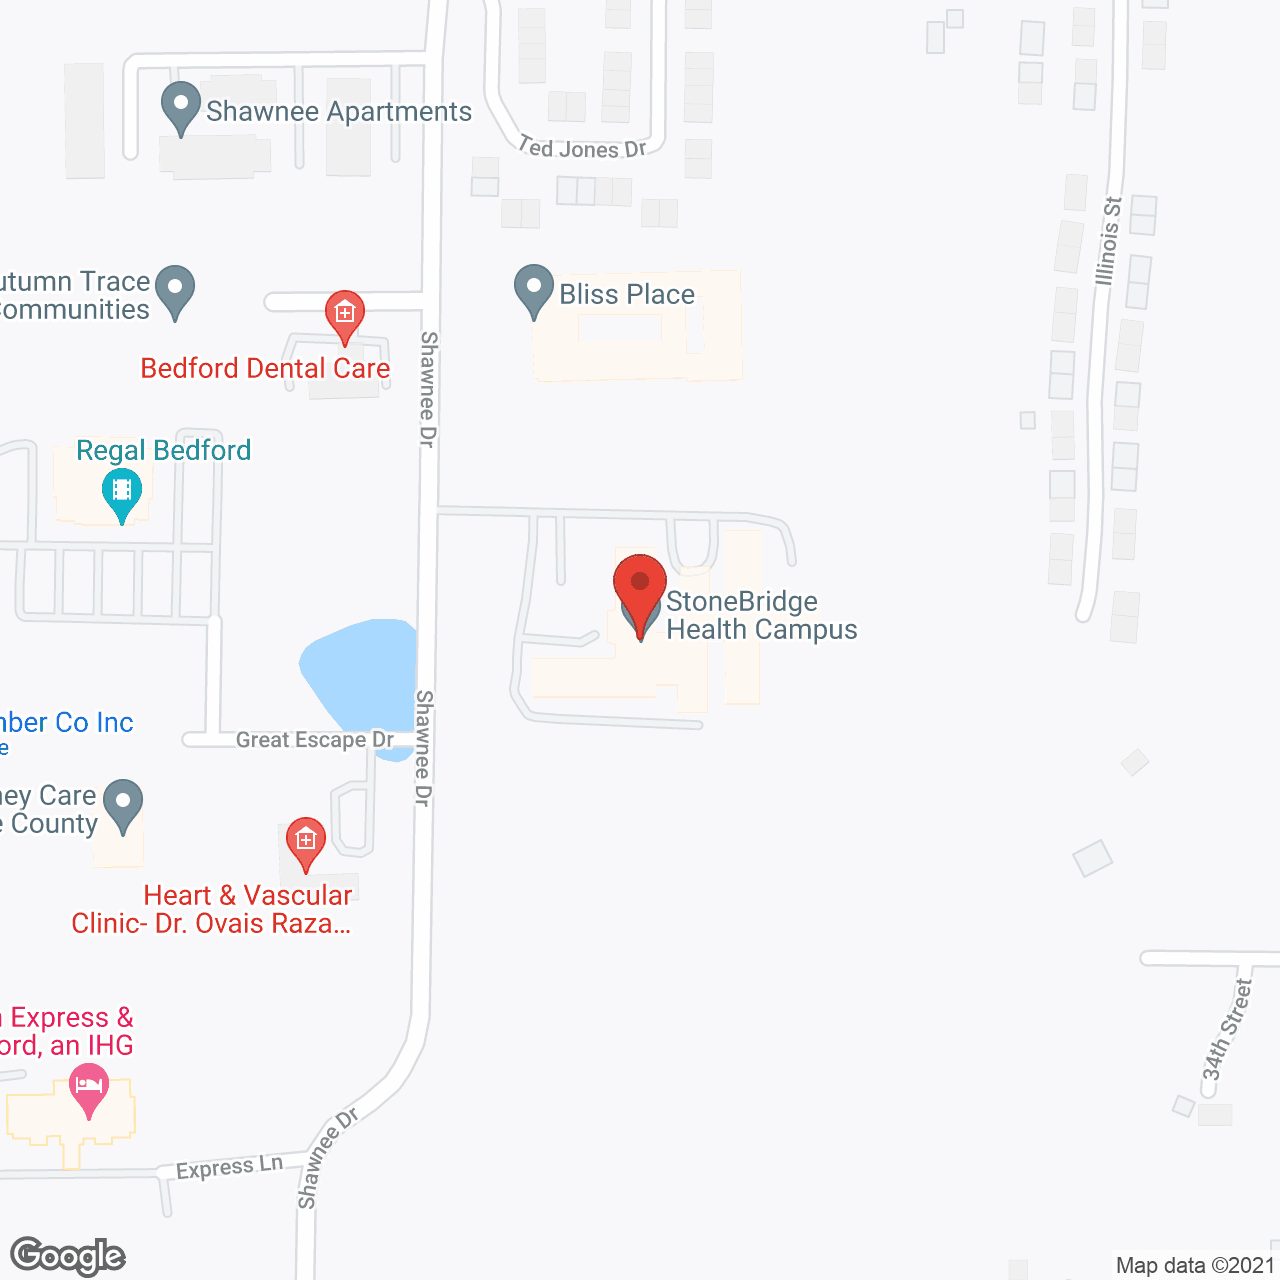 StoneBridge Health Campus in google map